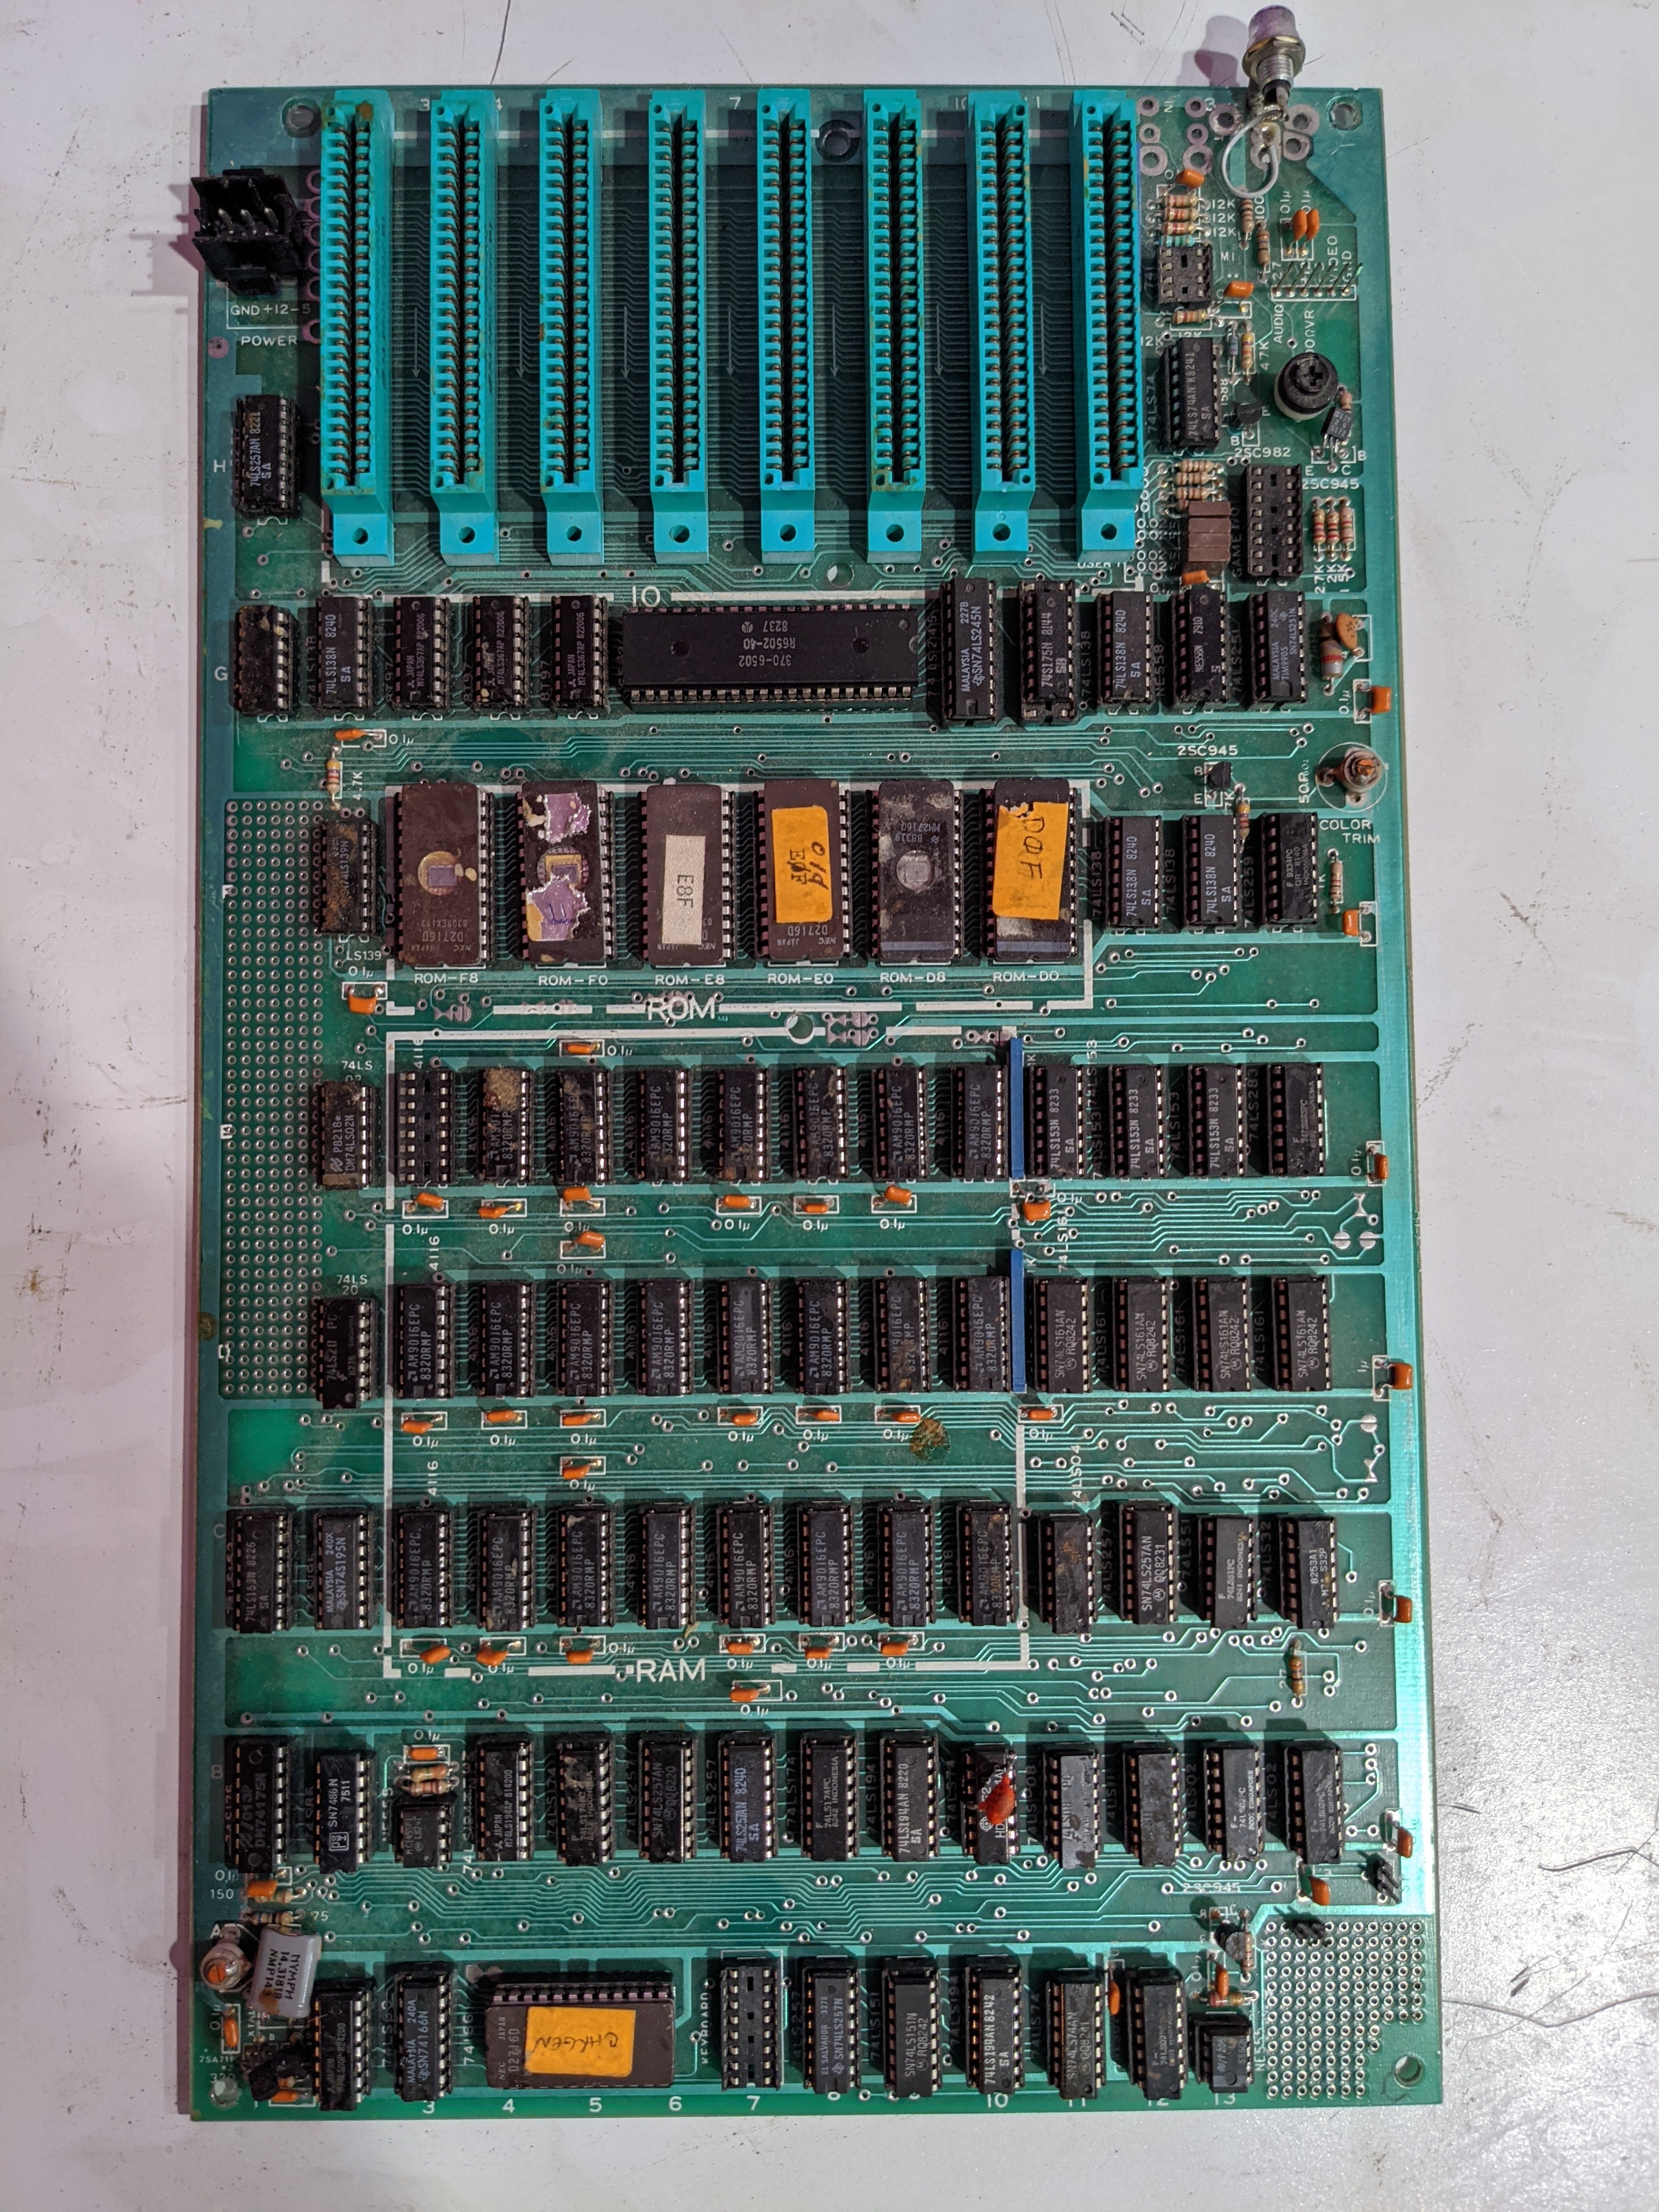 Unitron Apple II+ clone board